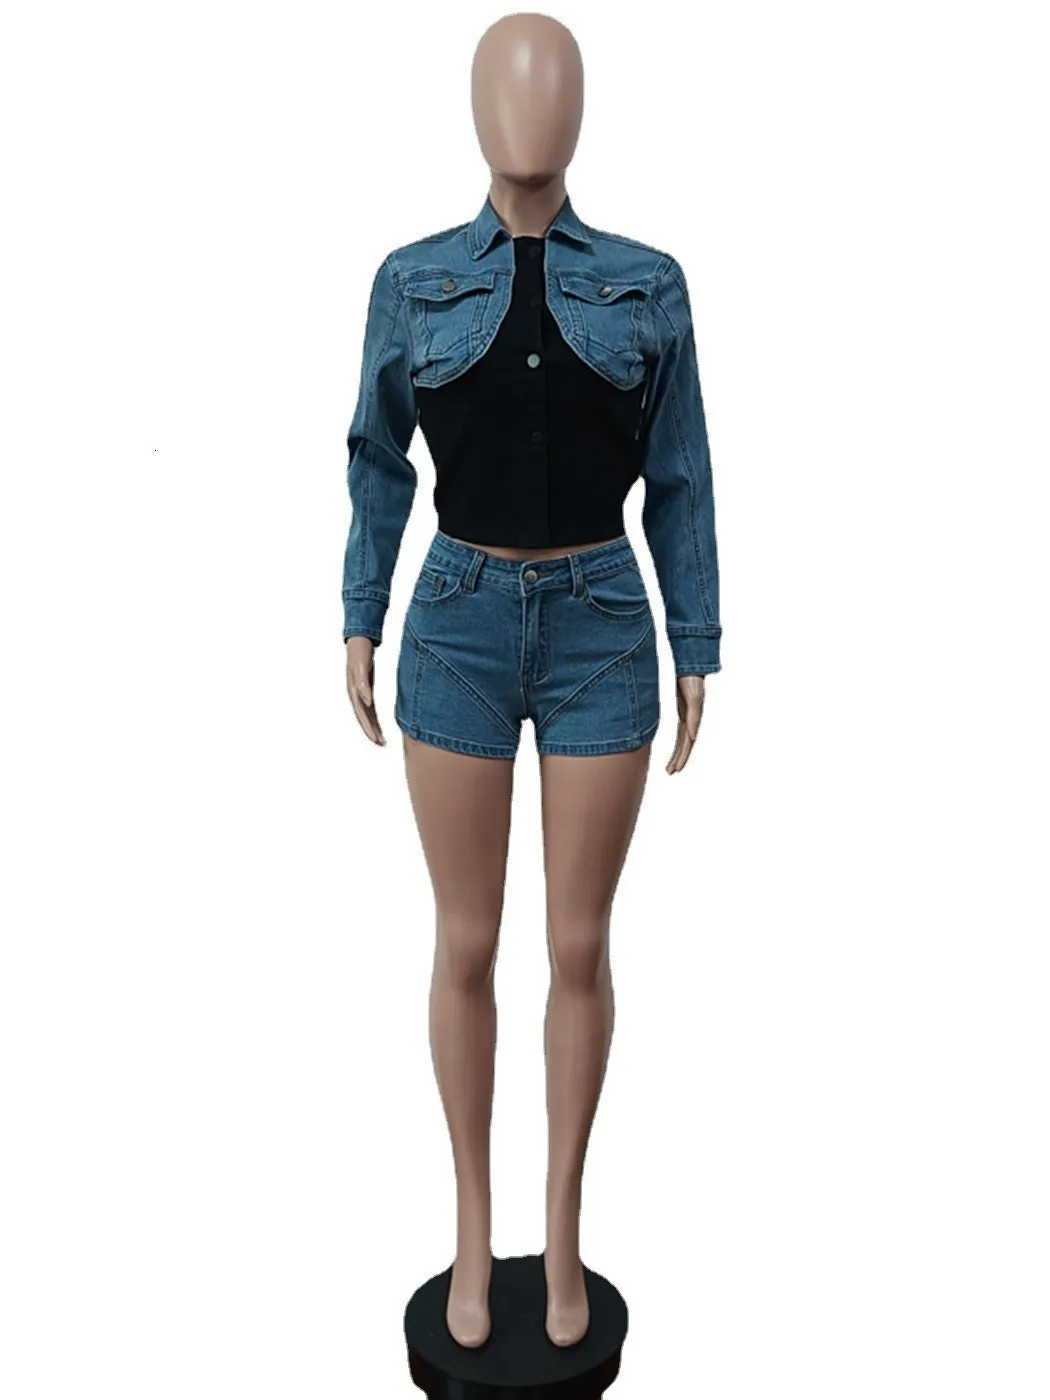 Women's Ladies Sexy Denim Outfits Tank Chain Hot Straps Tops +Hot Shorts  Set | eBay